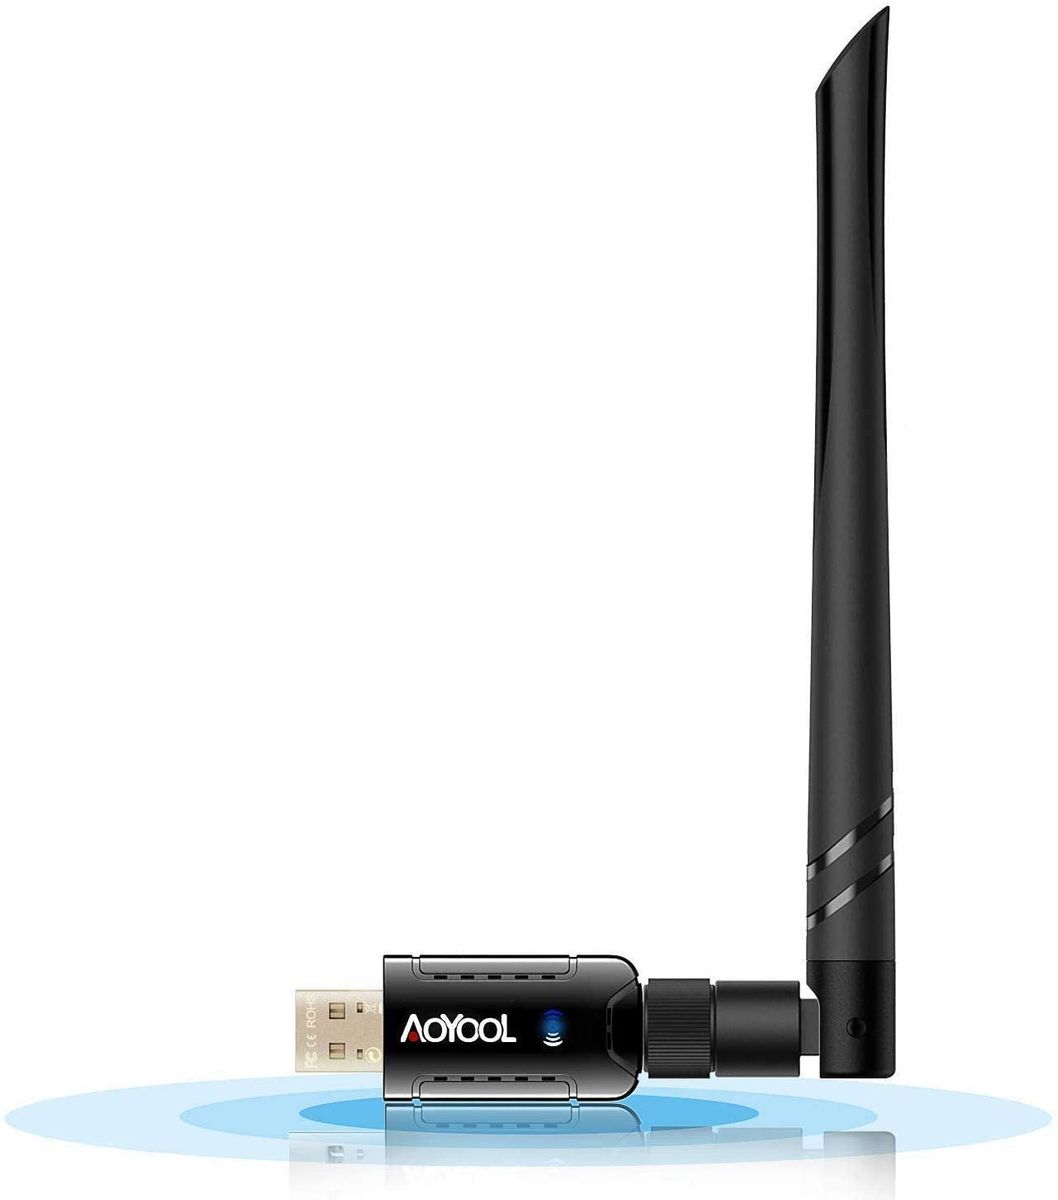 Aoyool WiFi Adapter 1200 Mbit/s (5.8G/867Mbps+2.4G/300 Mbps), WLAN Adapter USB3.0 Wireless Adapter for Windows, Mac OS X, PC/Desktop/Laptop